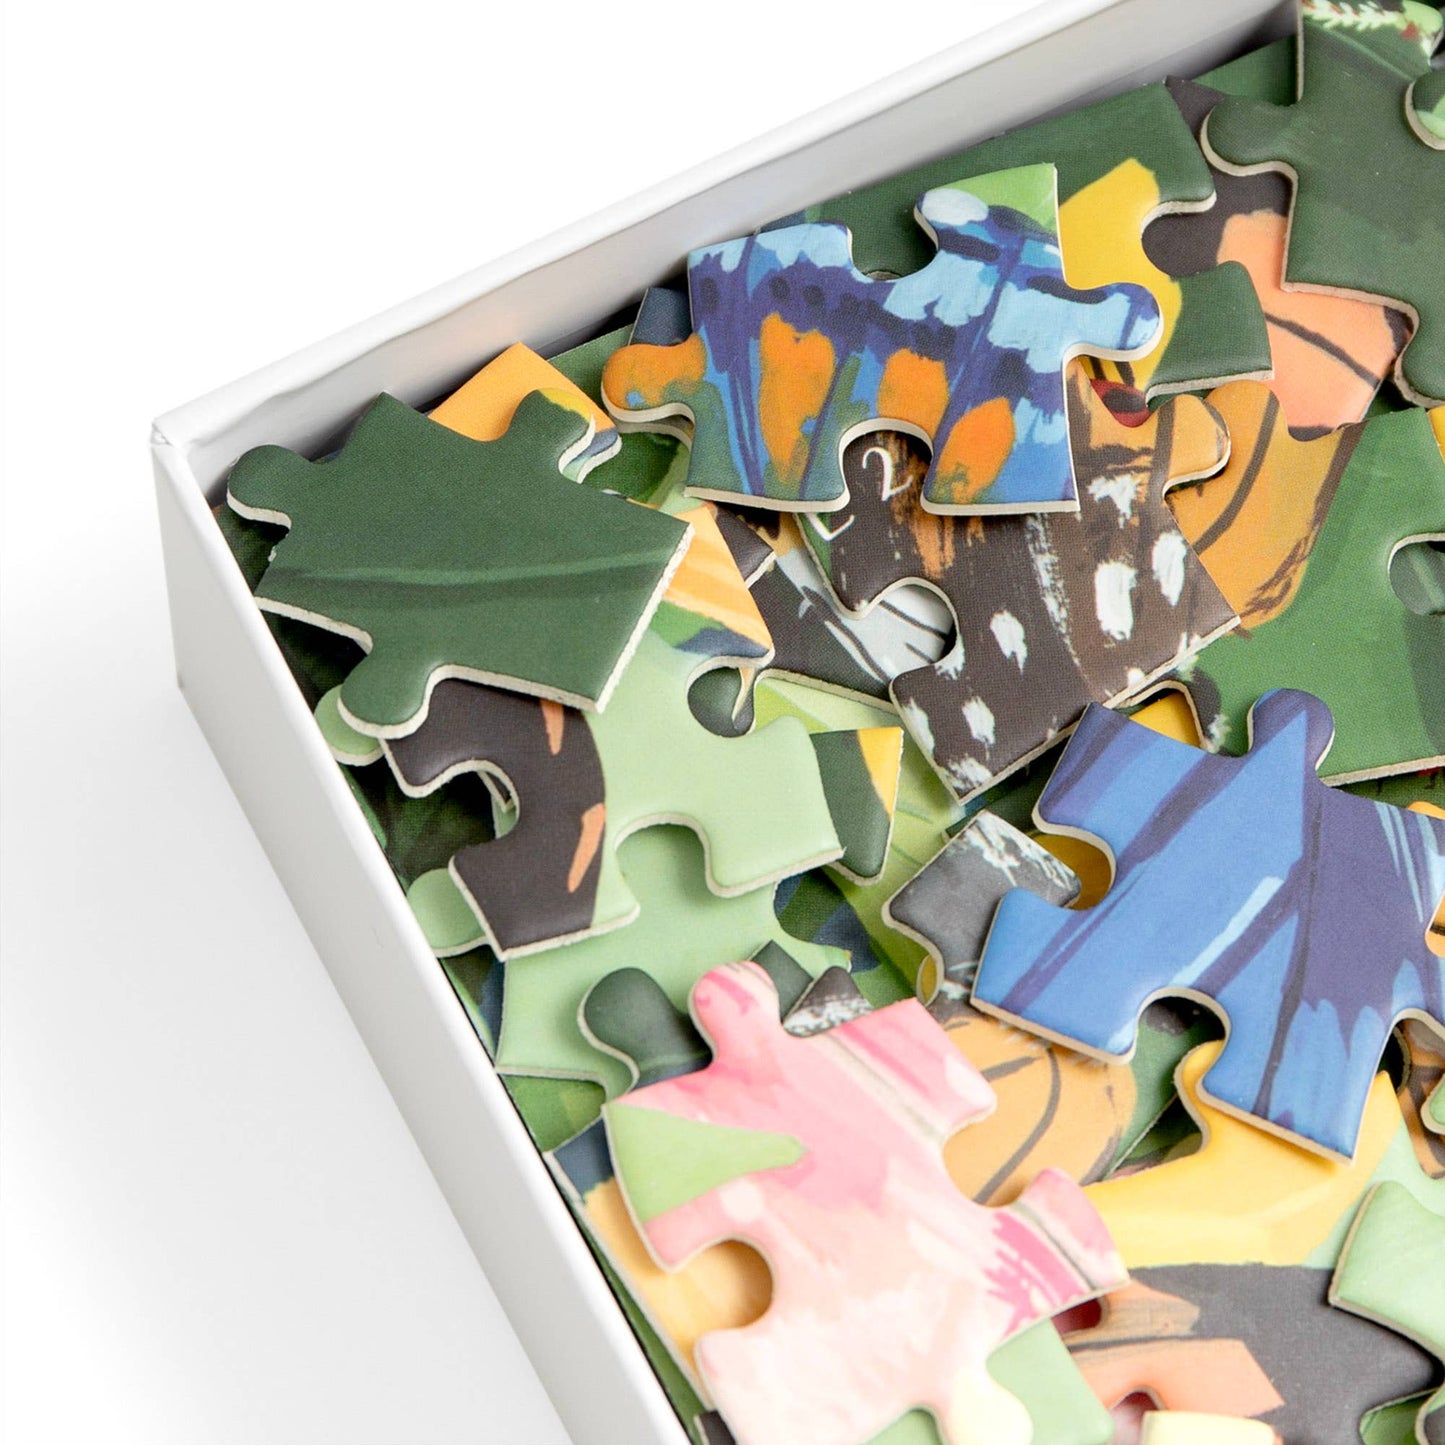 Pollinators - 500 Piece Jigsaw Puzzle